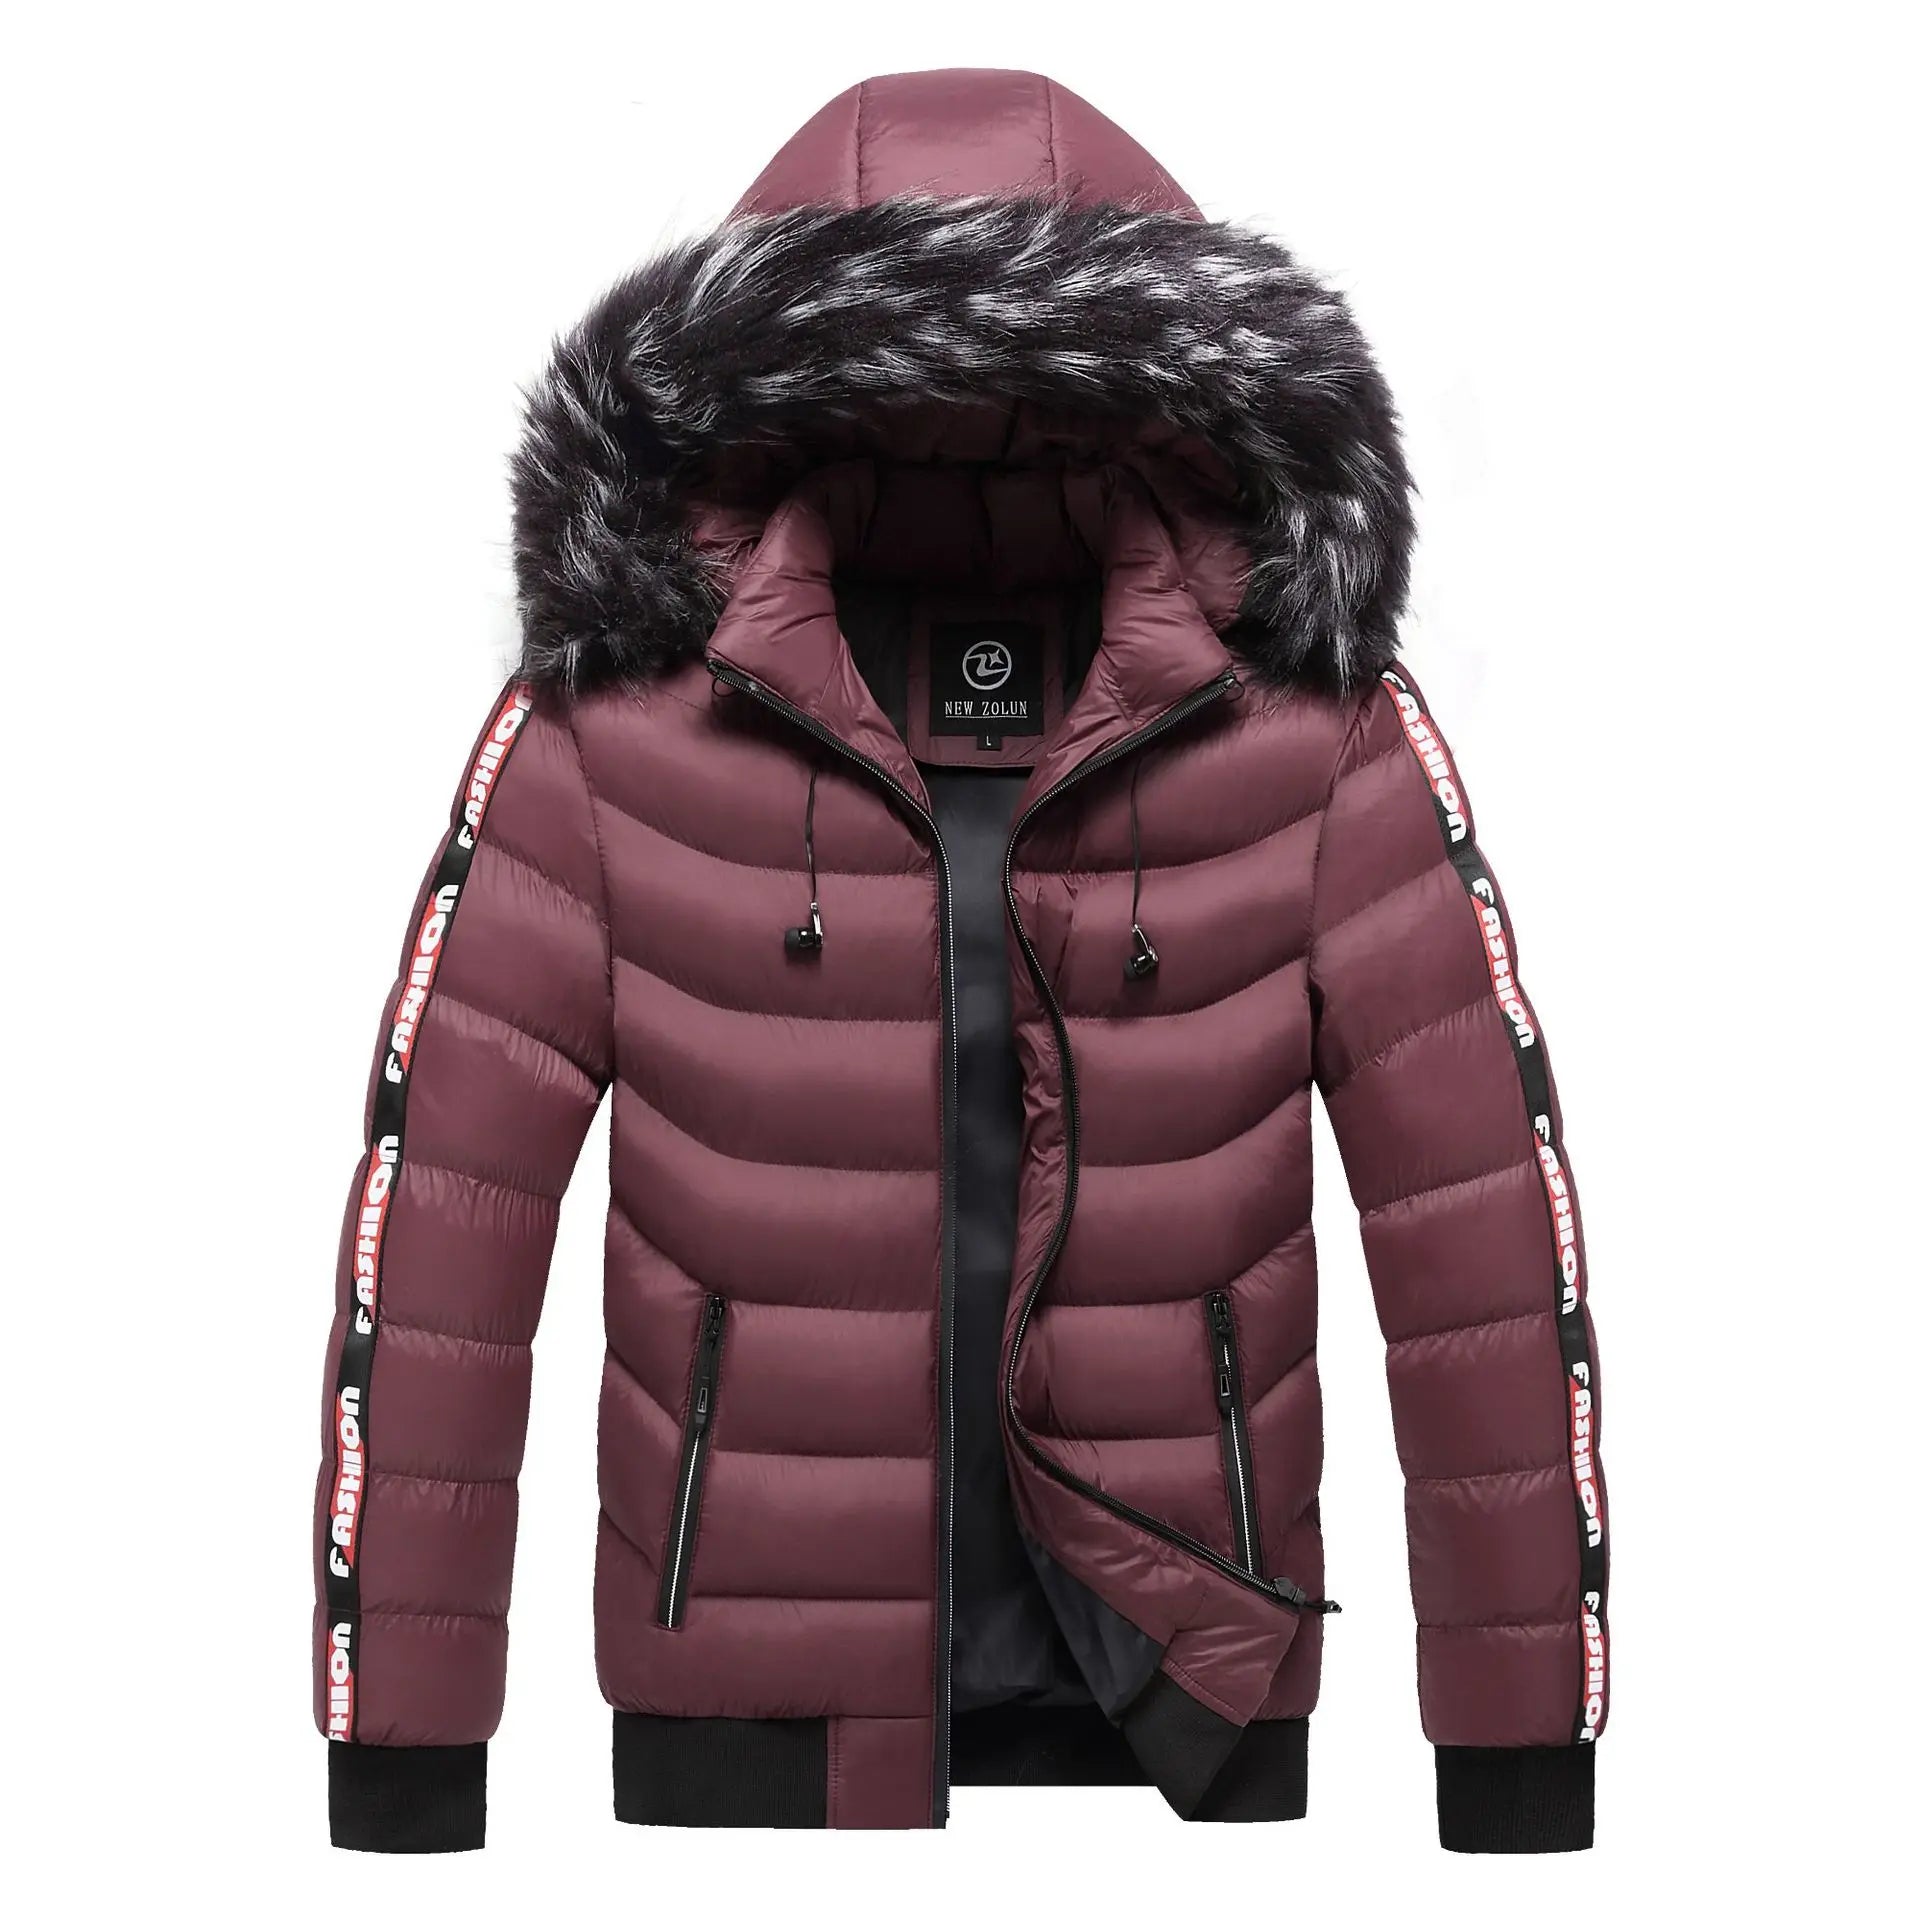 TEEK - Mens Fluff Collar Hooded Cotton Parka Coat COAT theteekdotcom 203 Red L(45-54KG) 